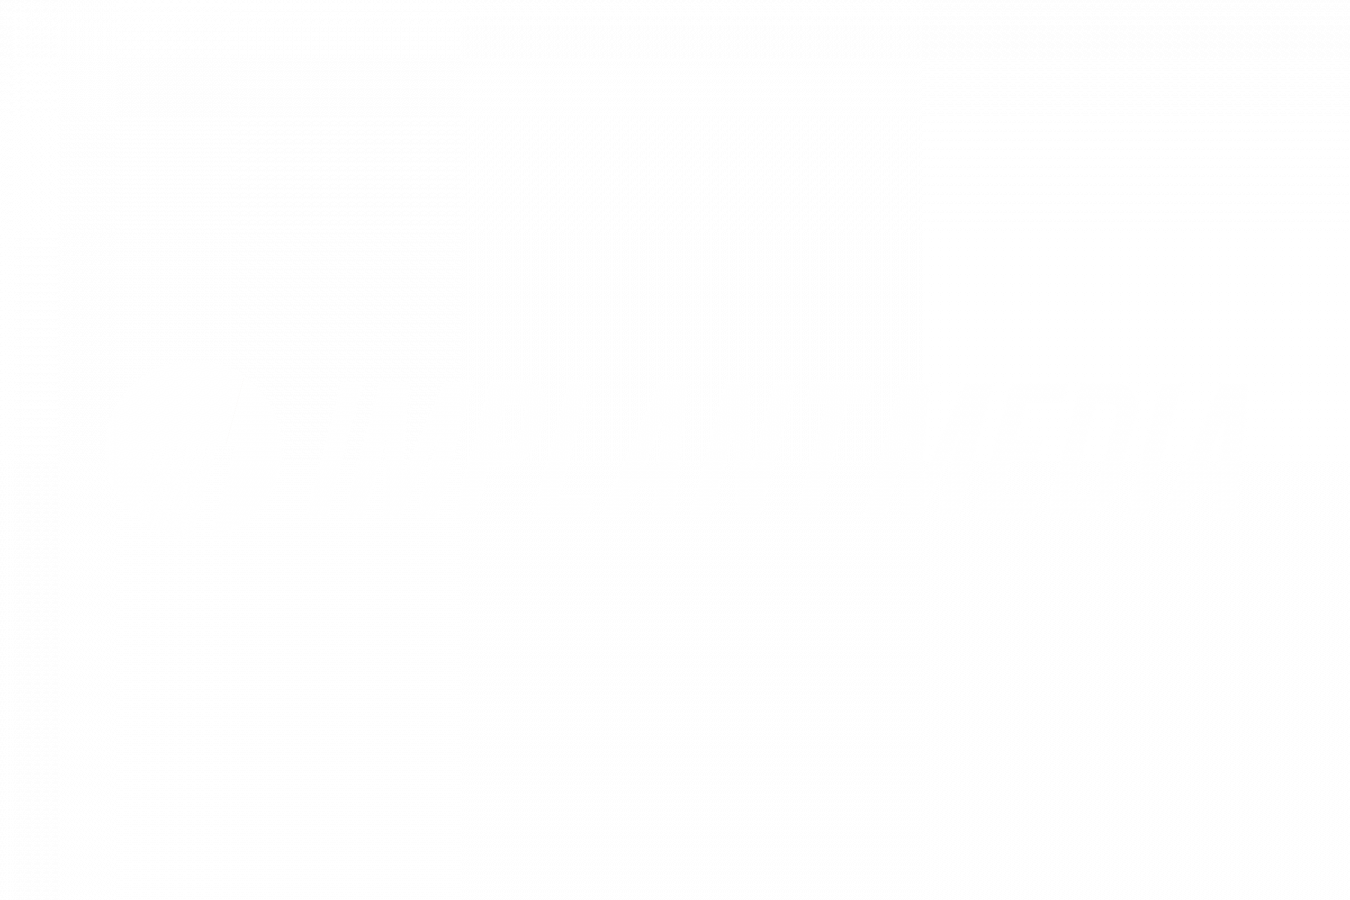 Implant Media